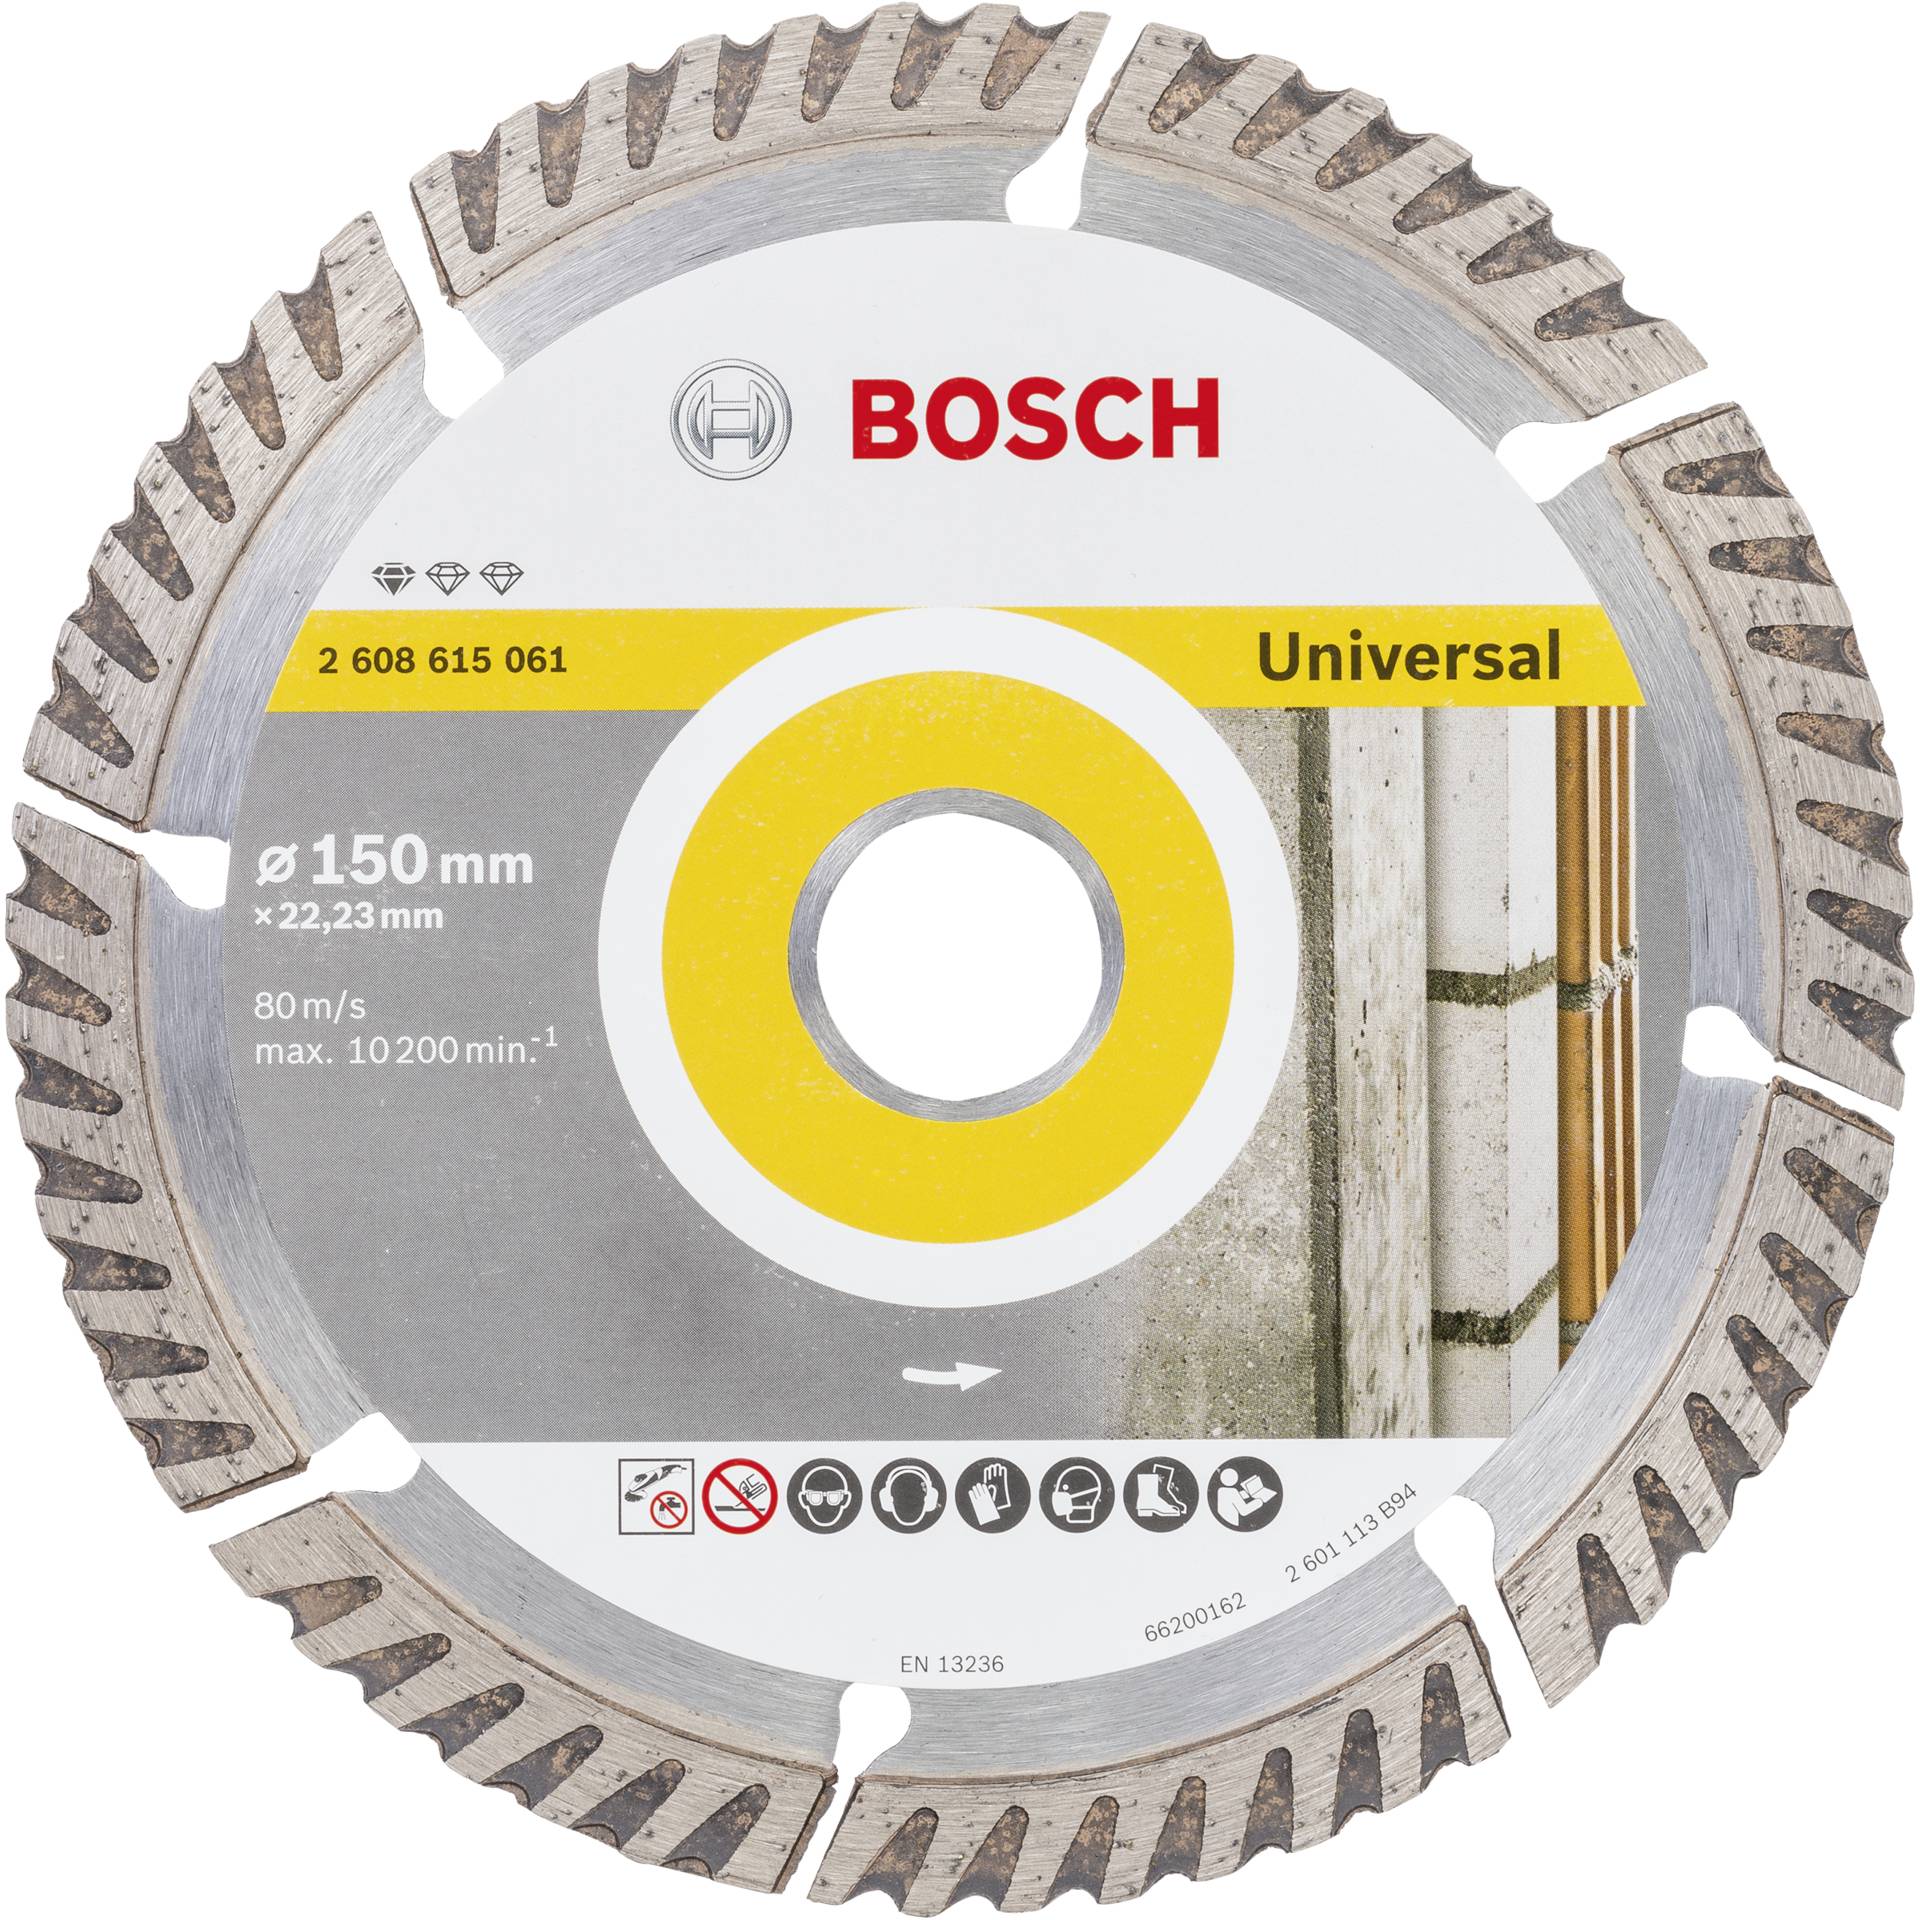 Bosch 10 DIA-TS 150x22,23 Standard for Universal 10 piece